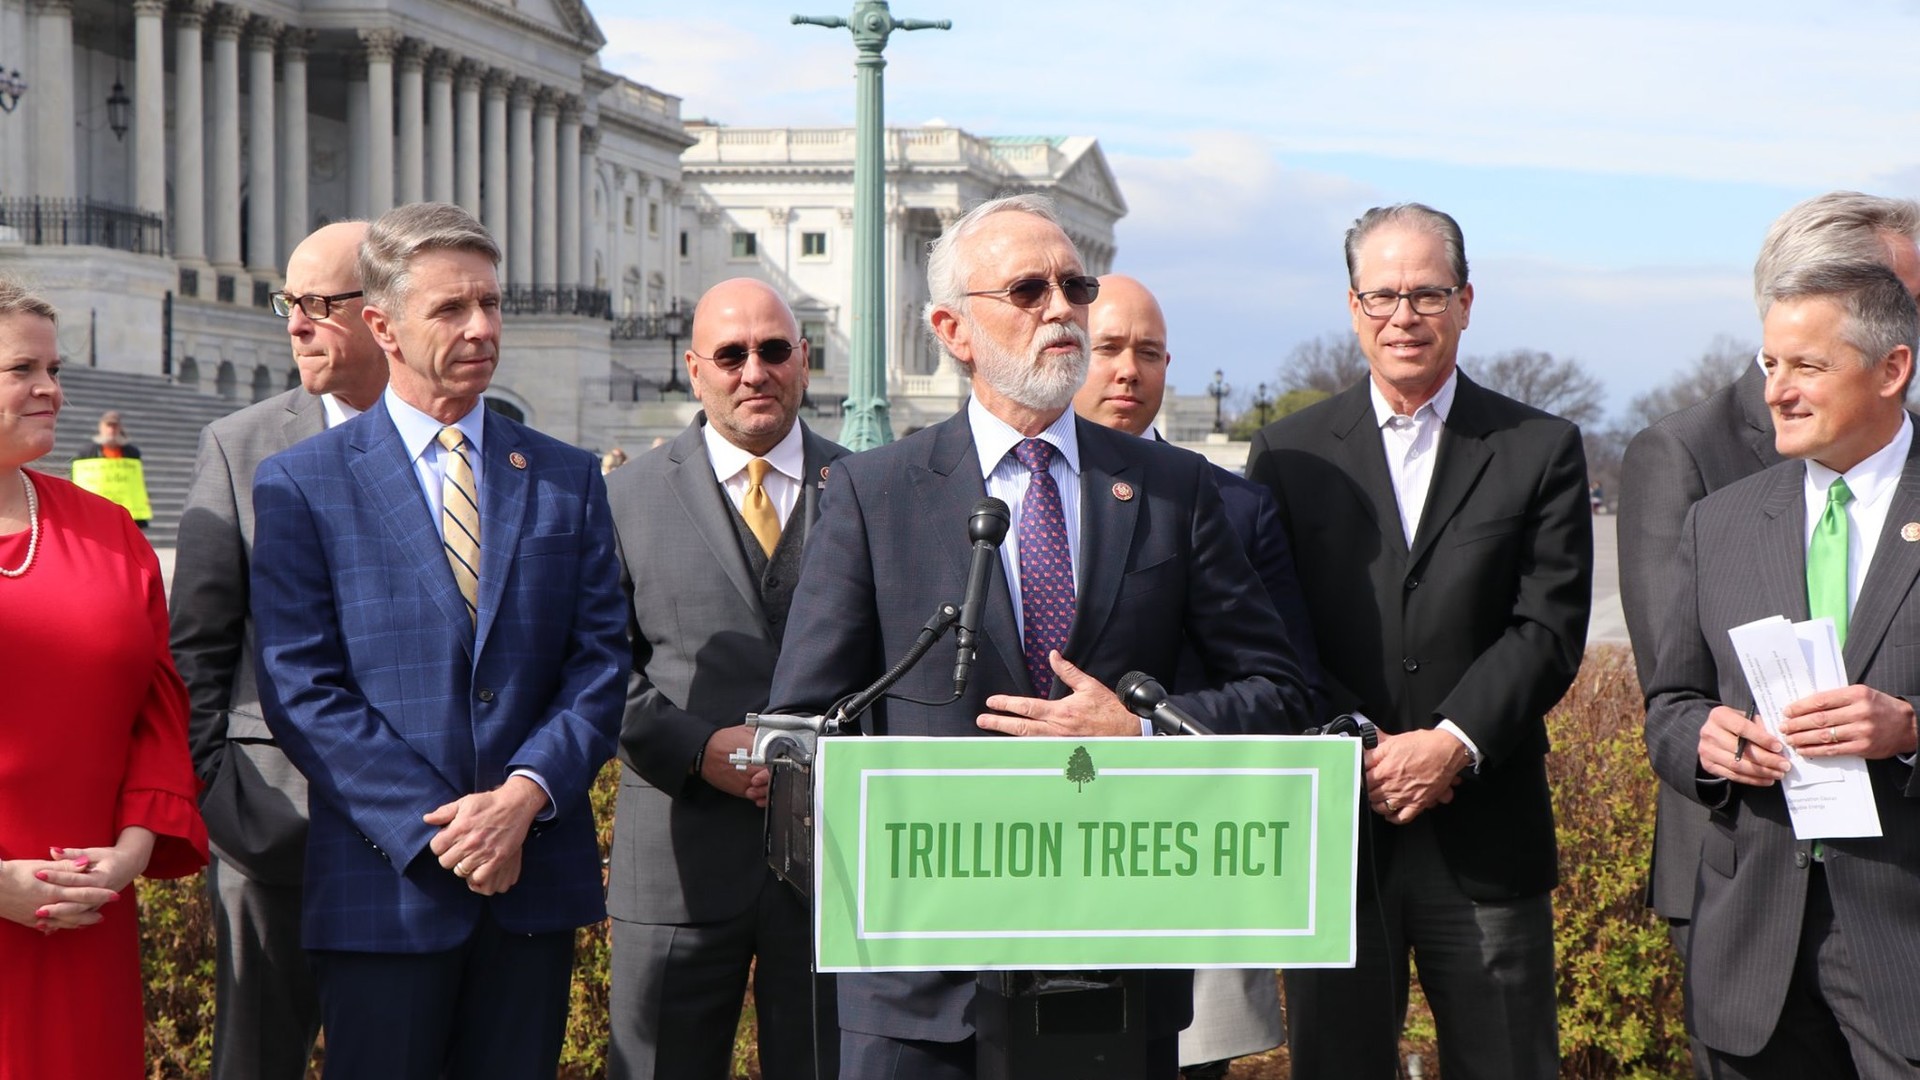 Trillion Trees Act